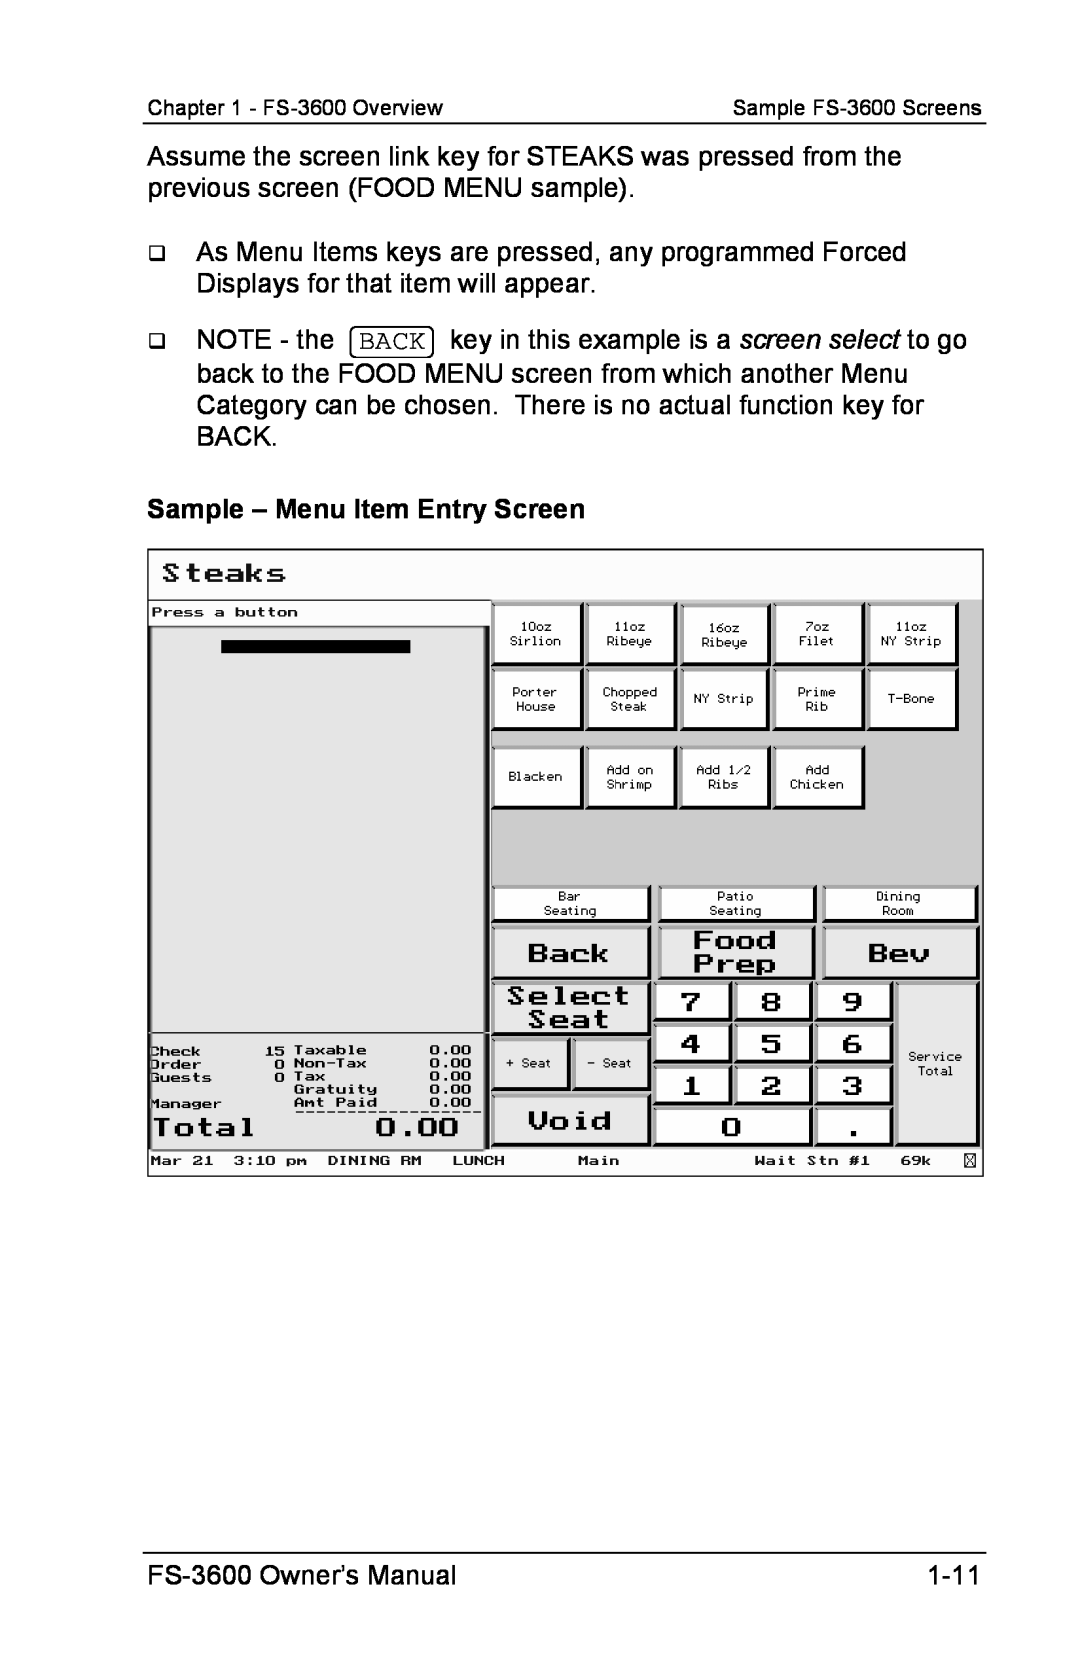 Toshiba FS-3600 owner manual Sample – Menu Item Entry Screen 